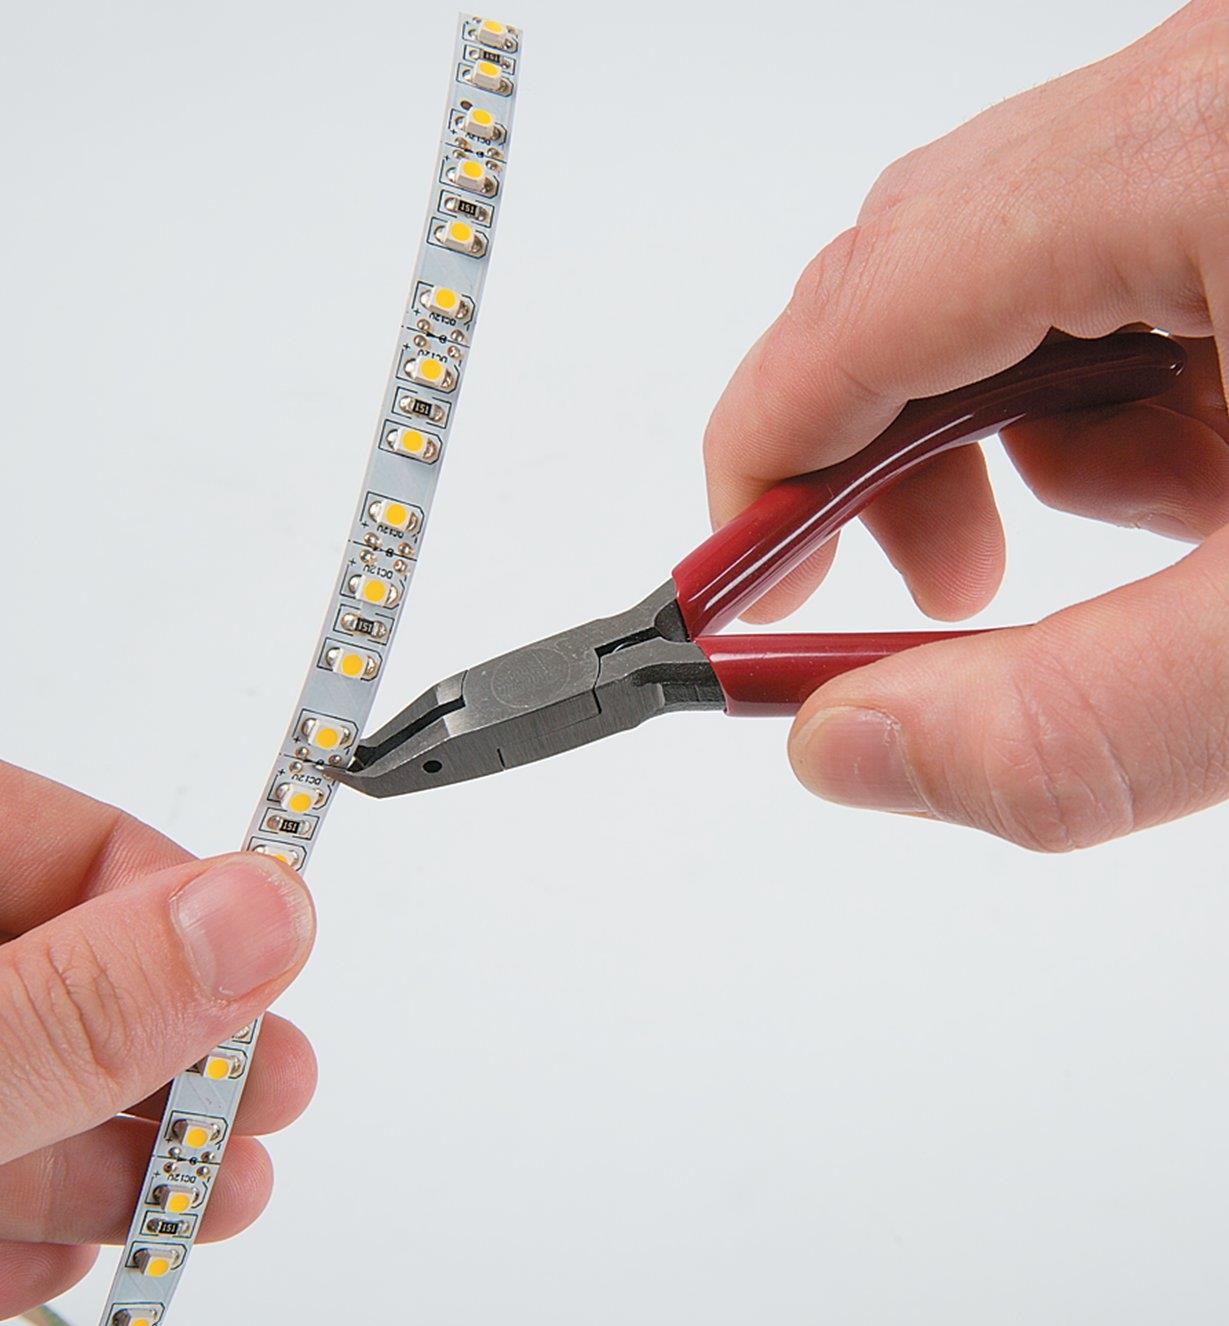 Using Mini Detail Snips to cut LED tape lighting